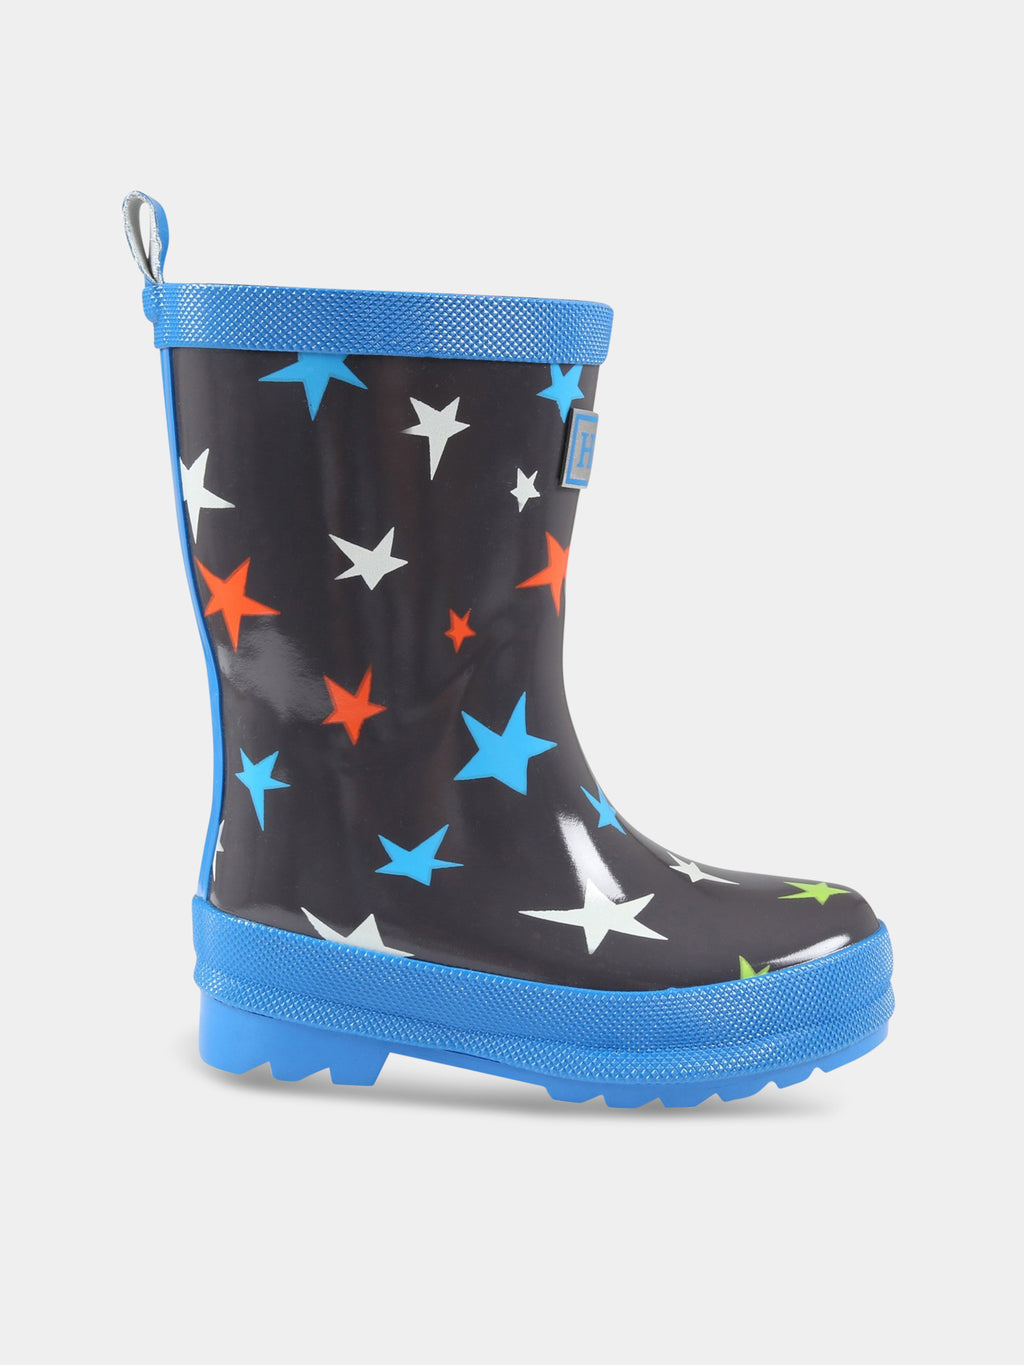 Grey rain-boots for kids